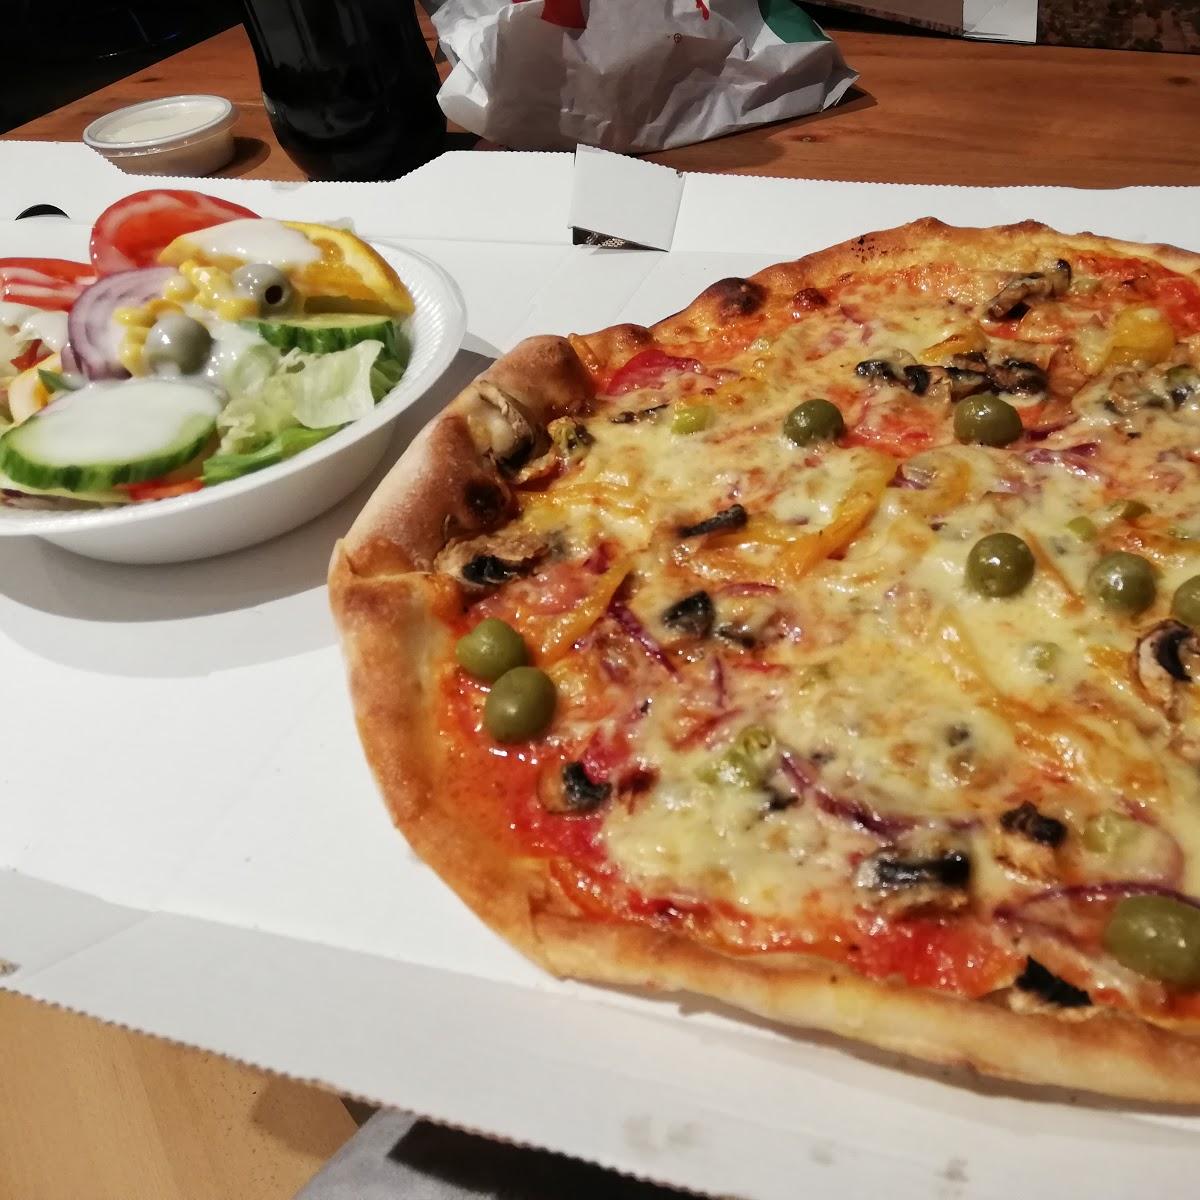 Restaurant "Verona Pizzeria" in Dortmund